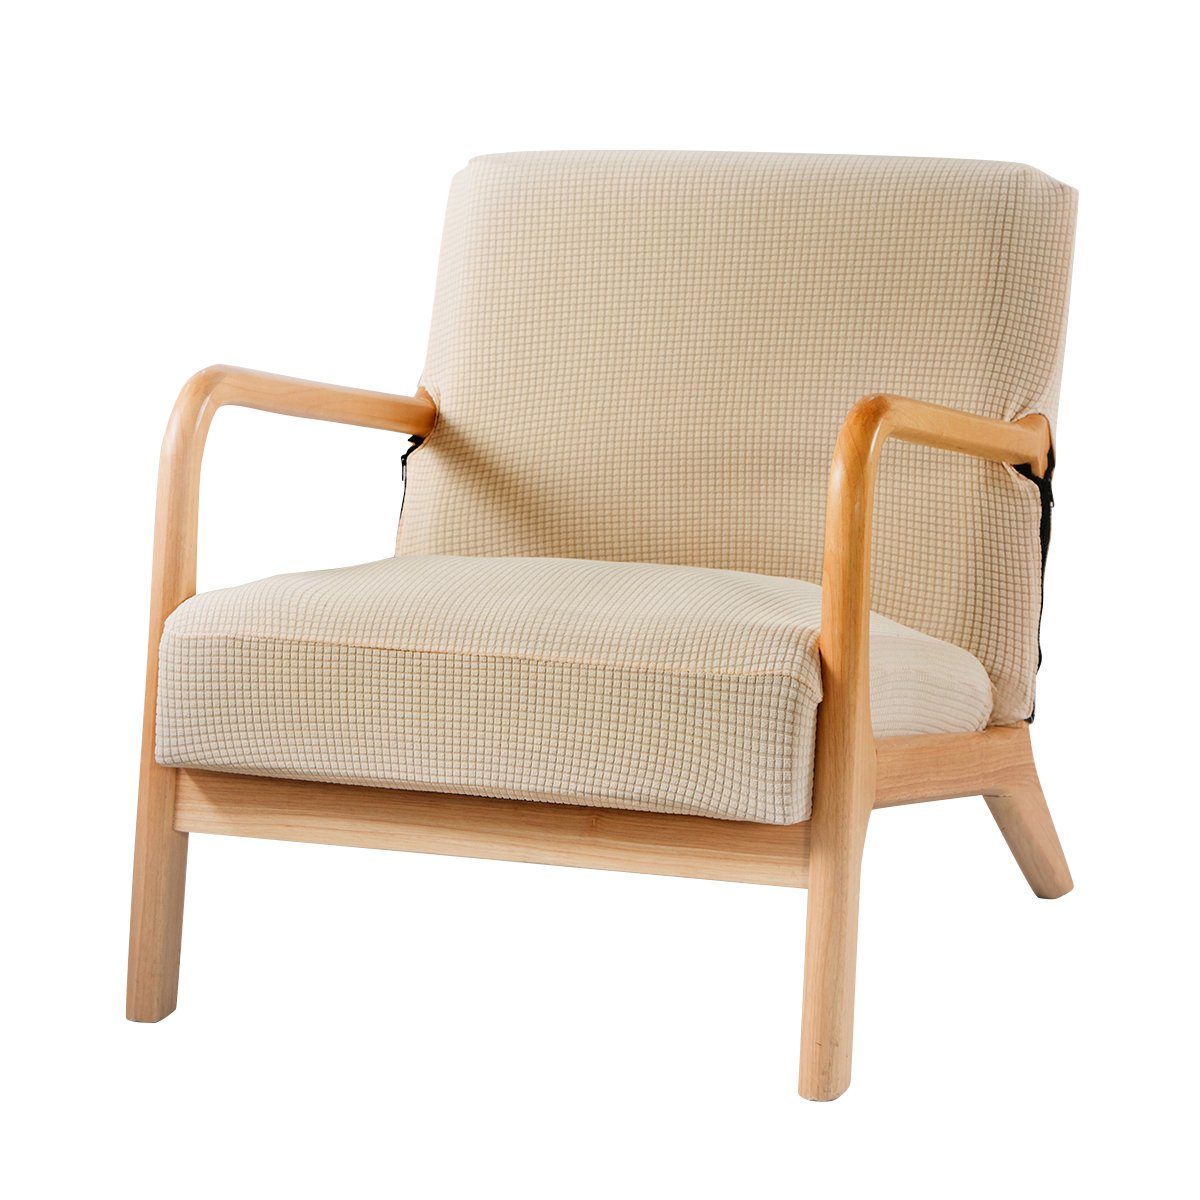 Stuhlhusse Sesselbezug Stretch Beige Qelus, Stuhlbezug, Wohnkultur Reißverschluss